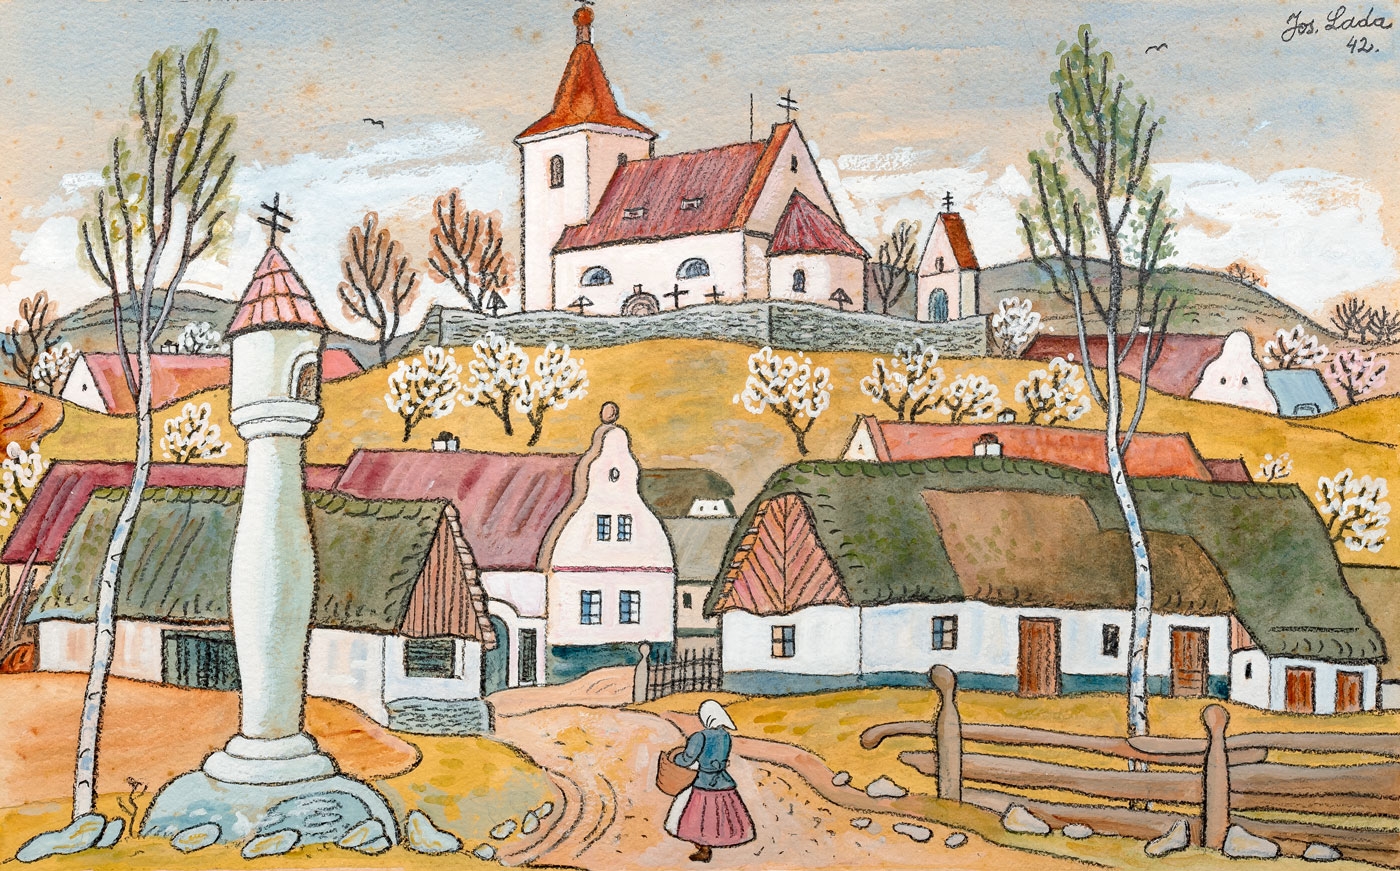 Spring Path into the Village by Josef Lada, 1942